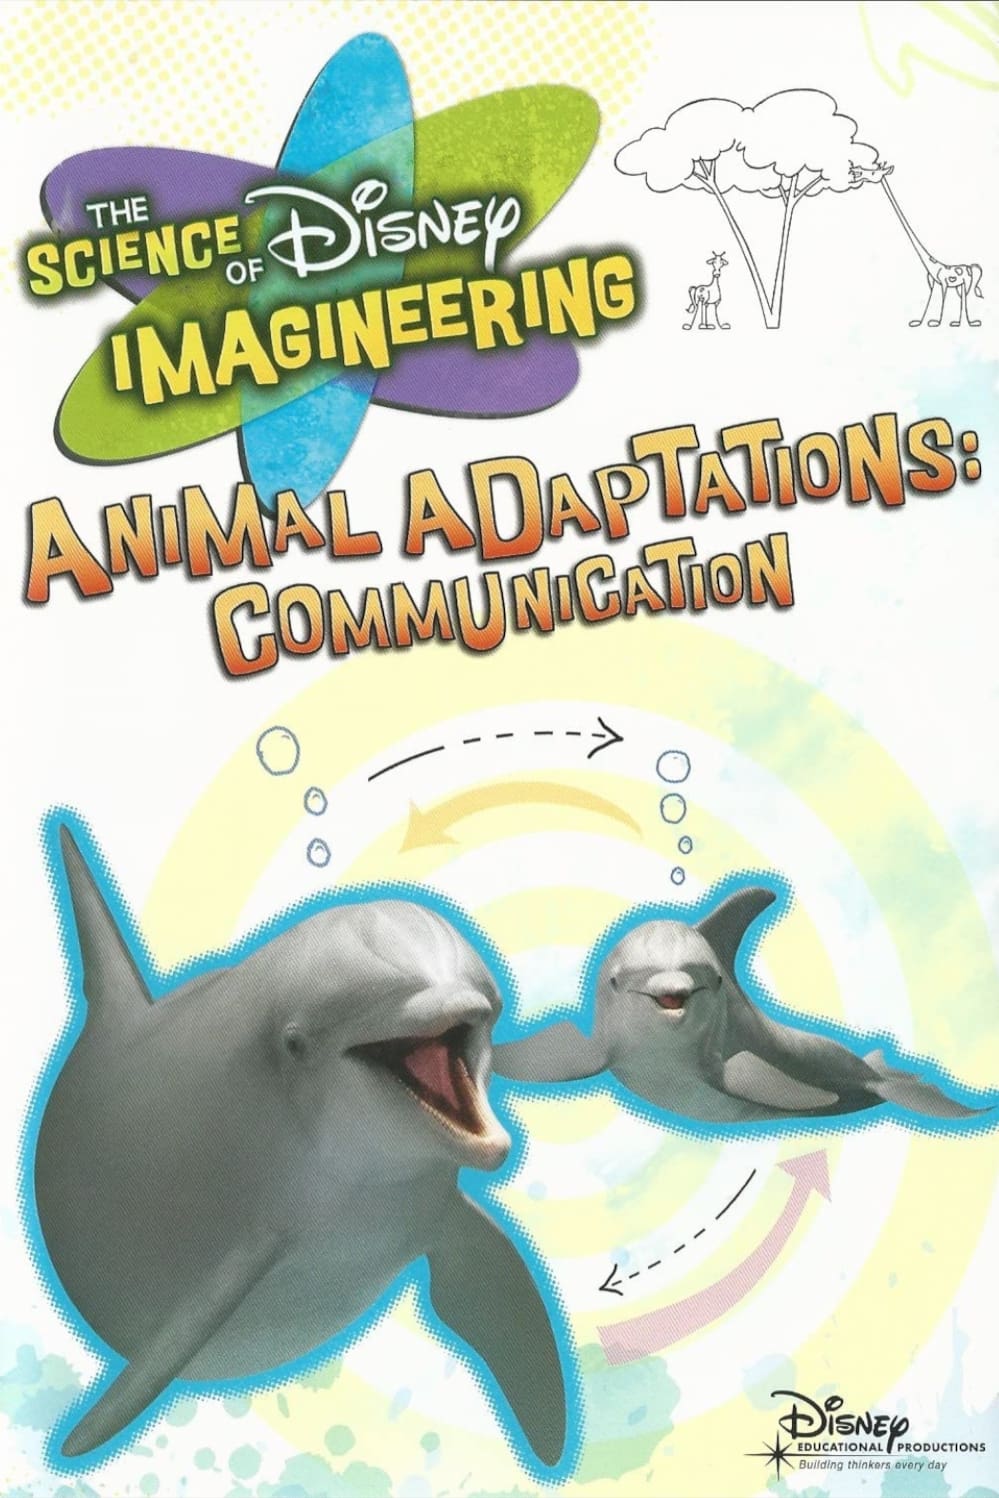 The Science of Disney Imagineering: Animal Adaptations - Communication